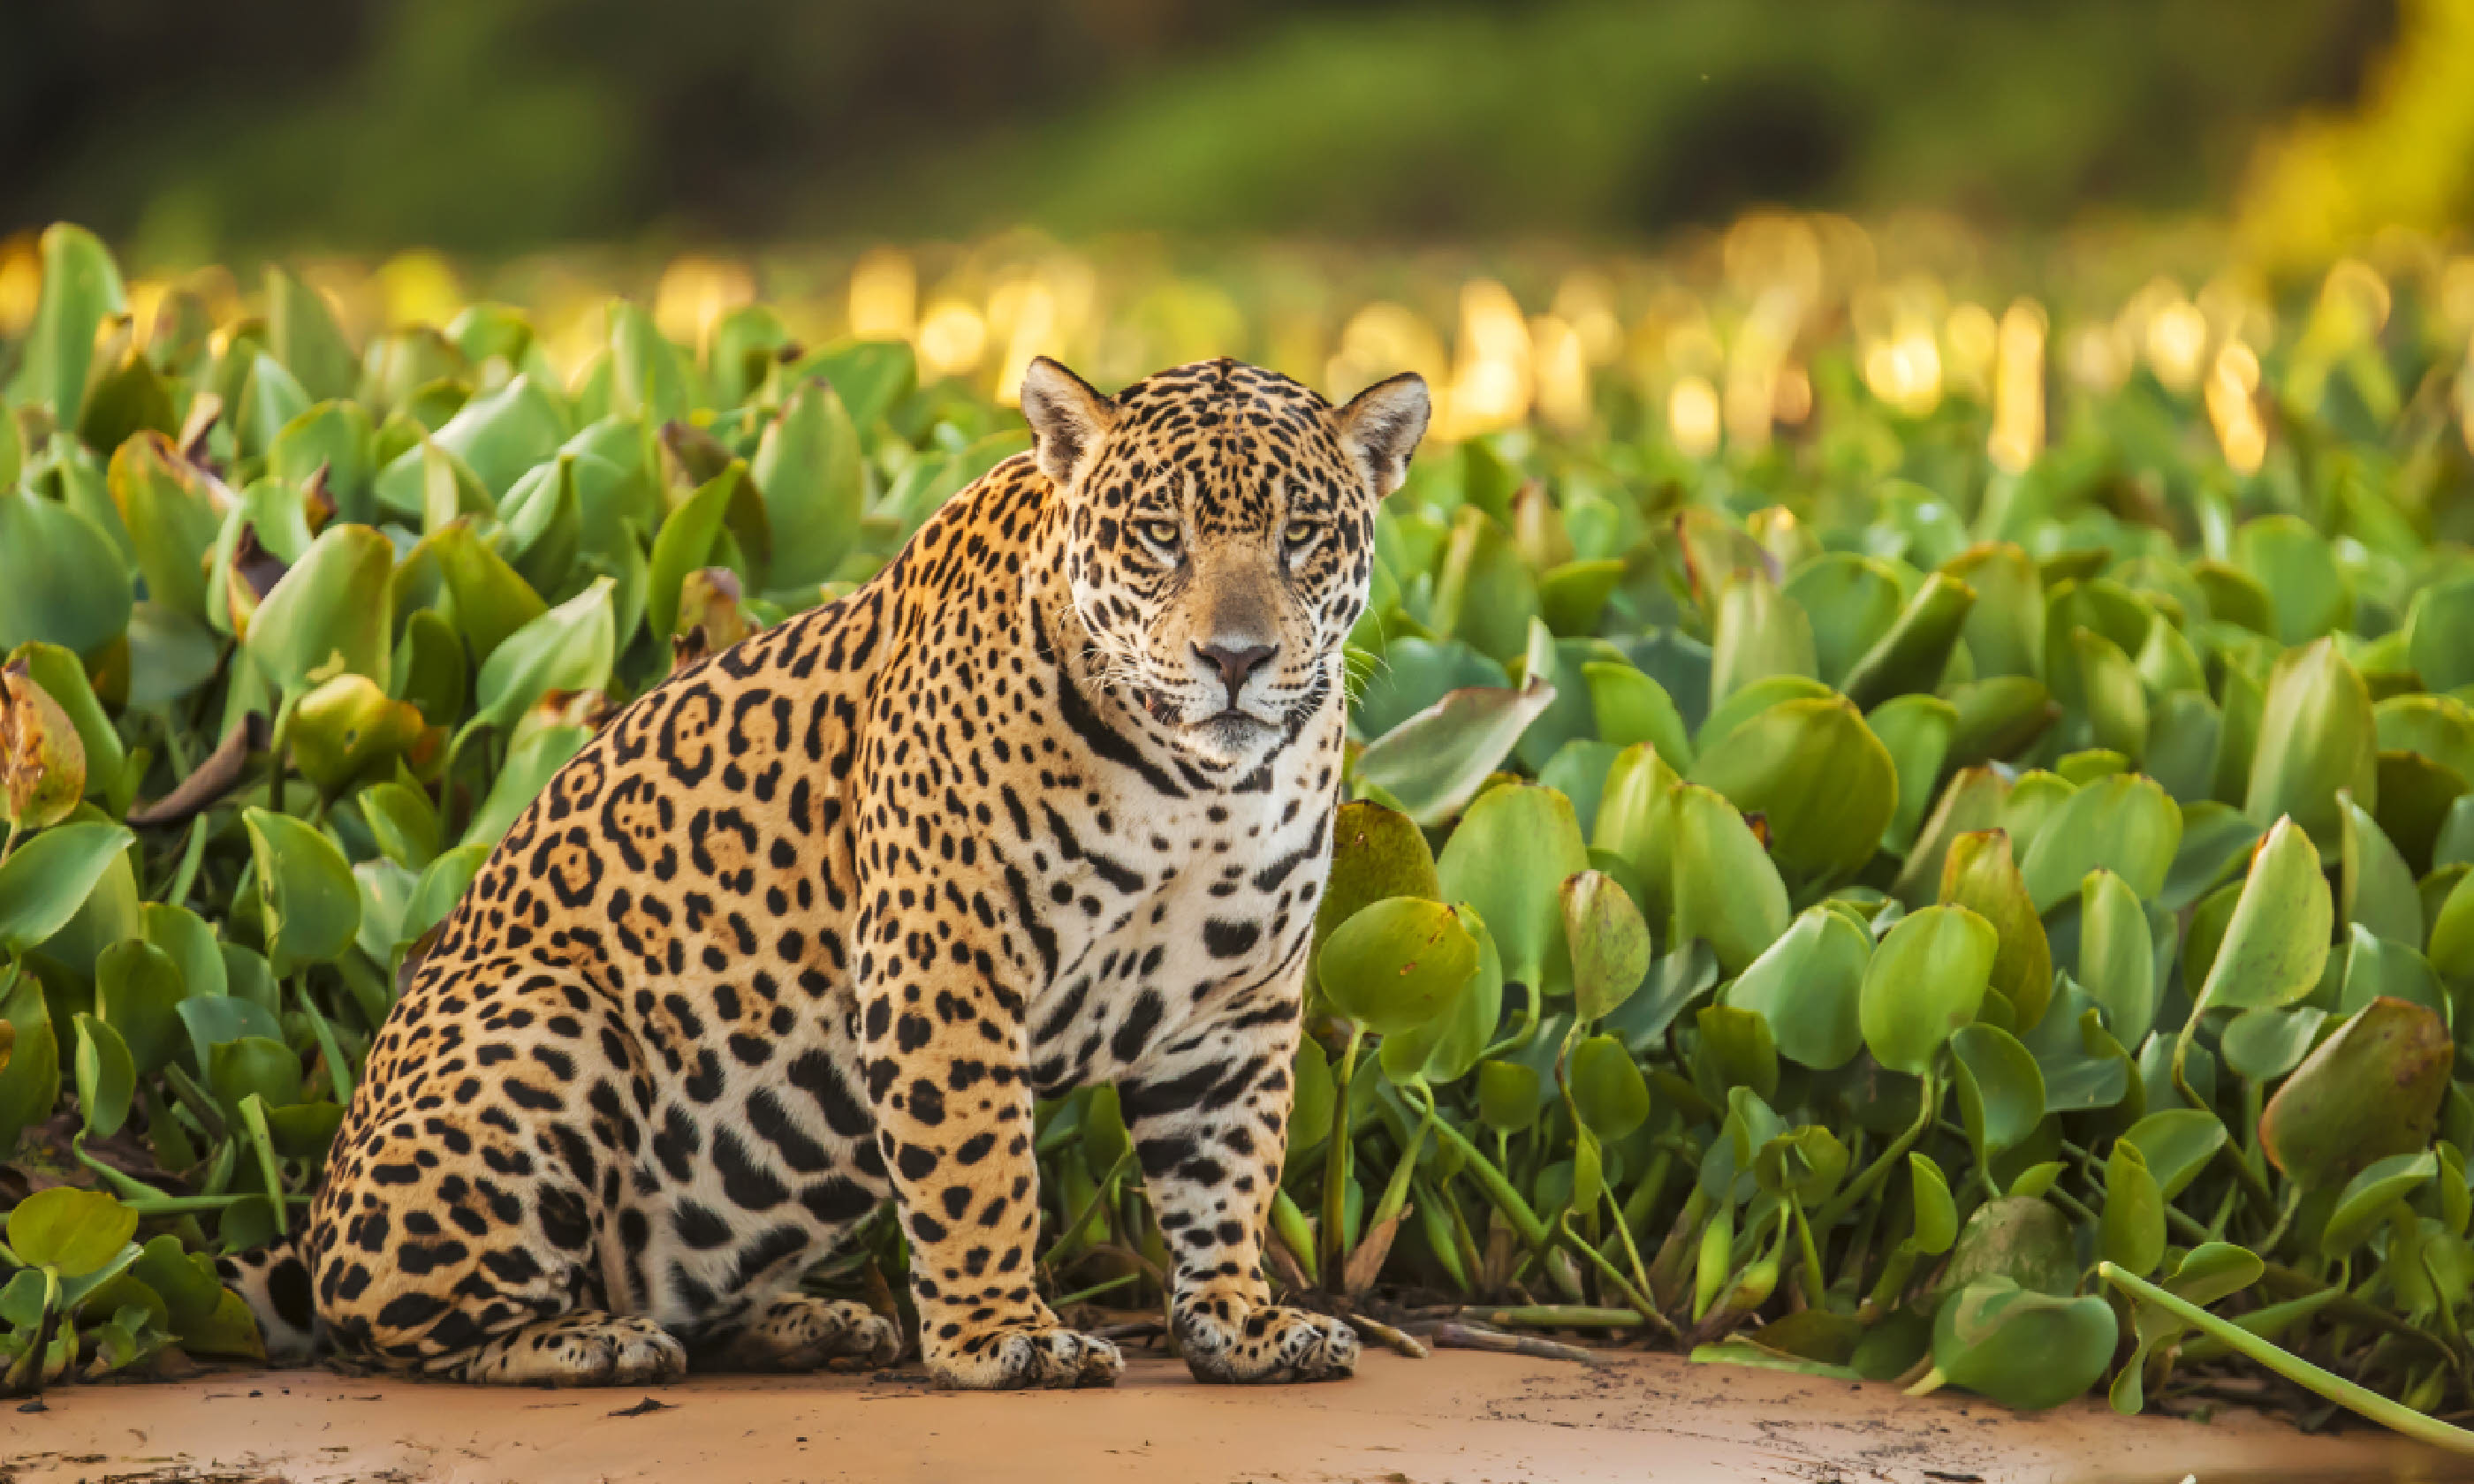 Jaguar in Brazil (Shutterstock)